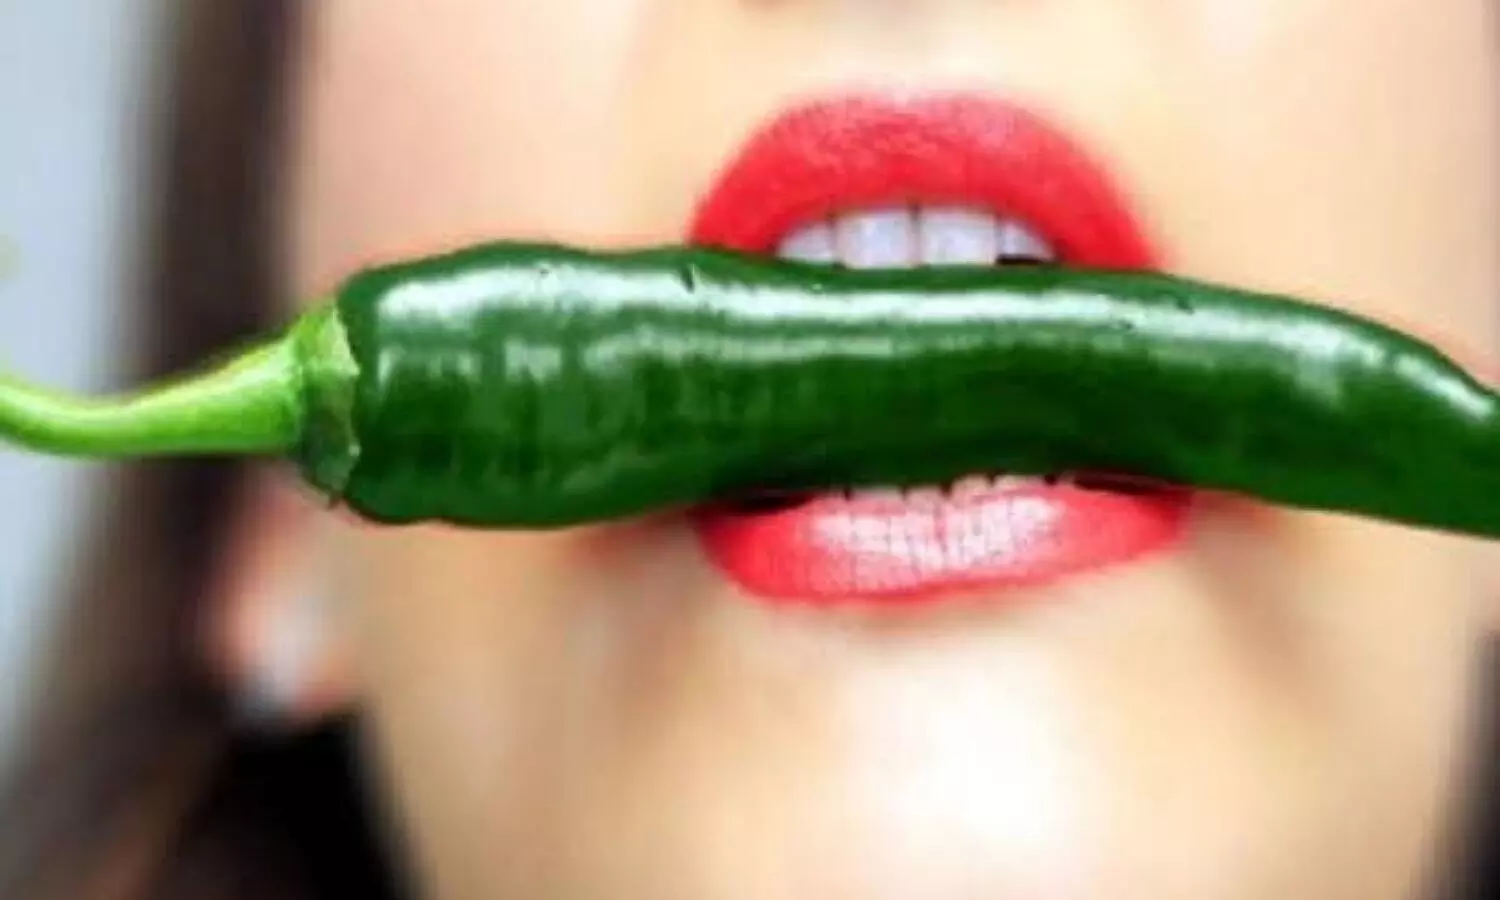 Green chili benefits for health